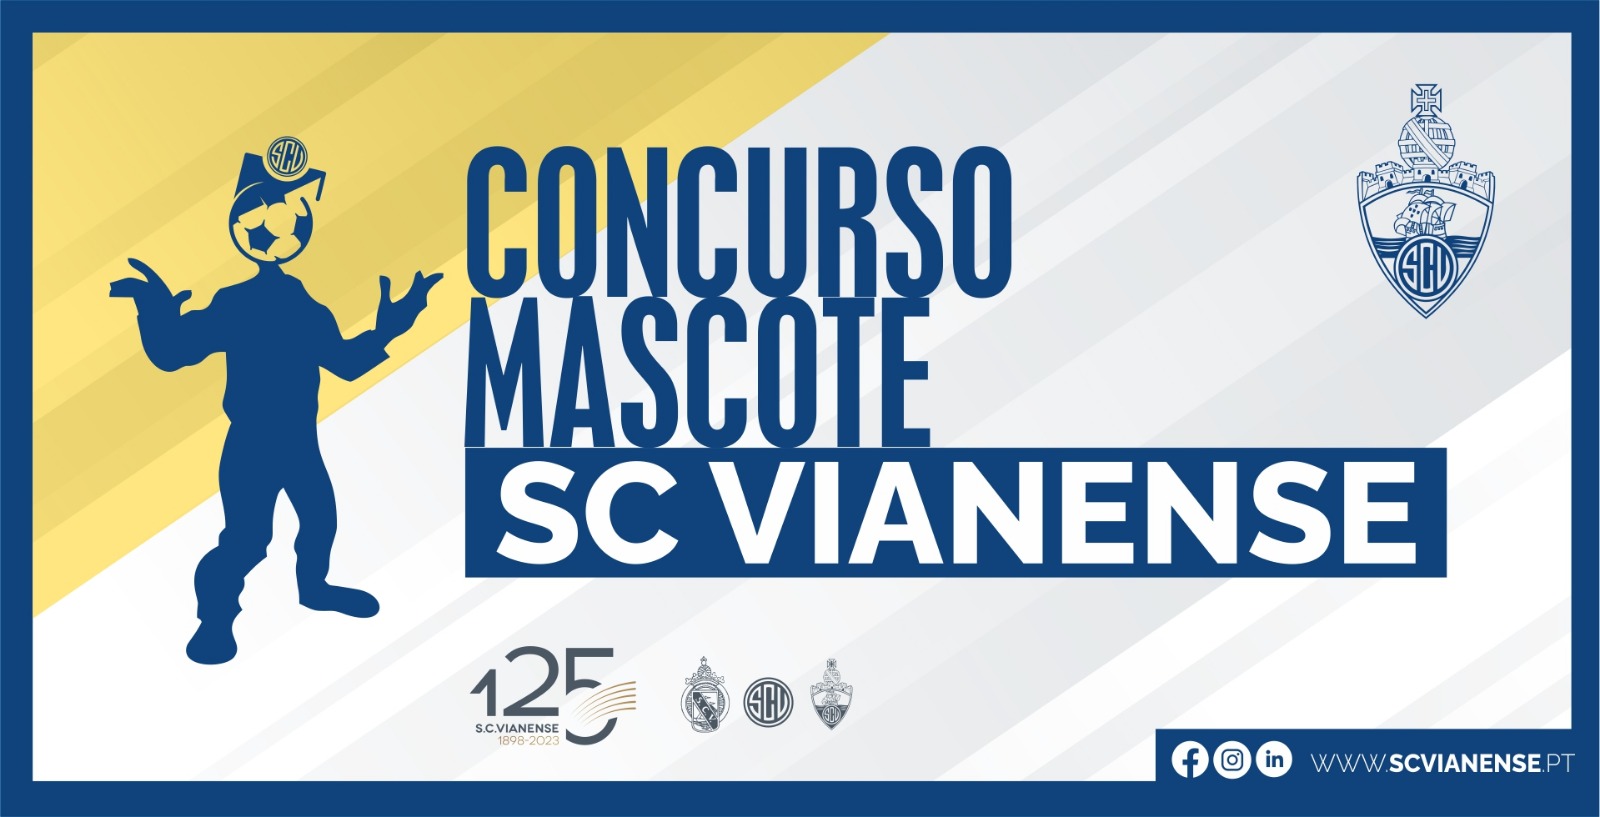 Concurso Mascote SC Vianense